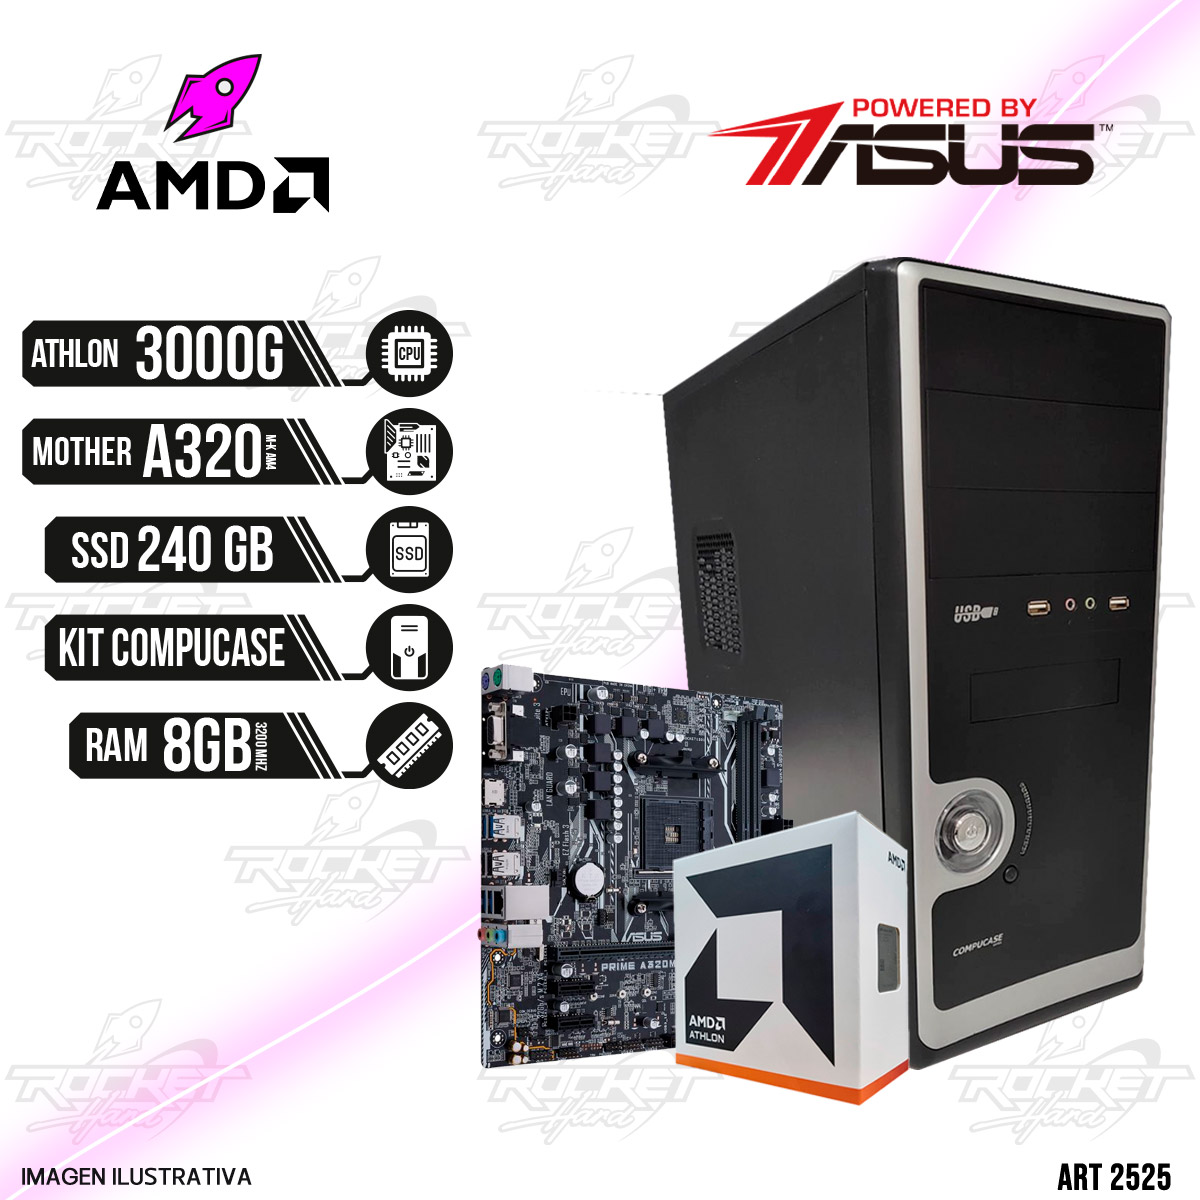 PC ROCKET ASUS 1 AMD ATHLON 3000G